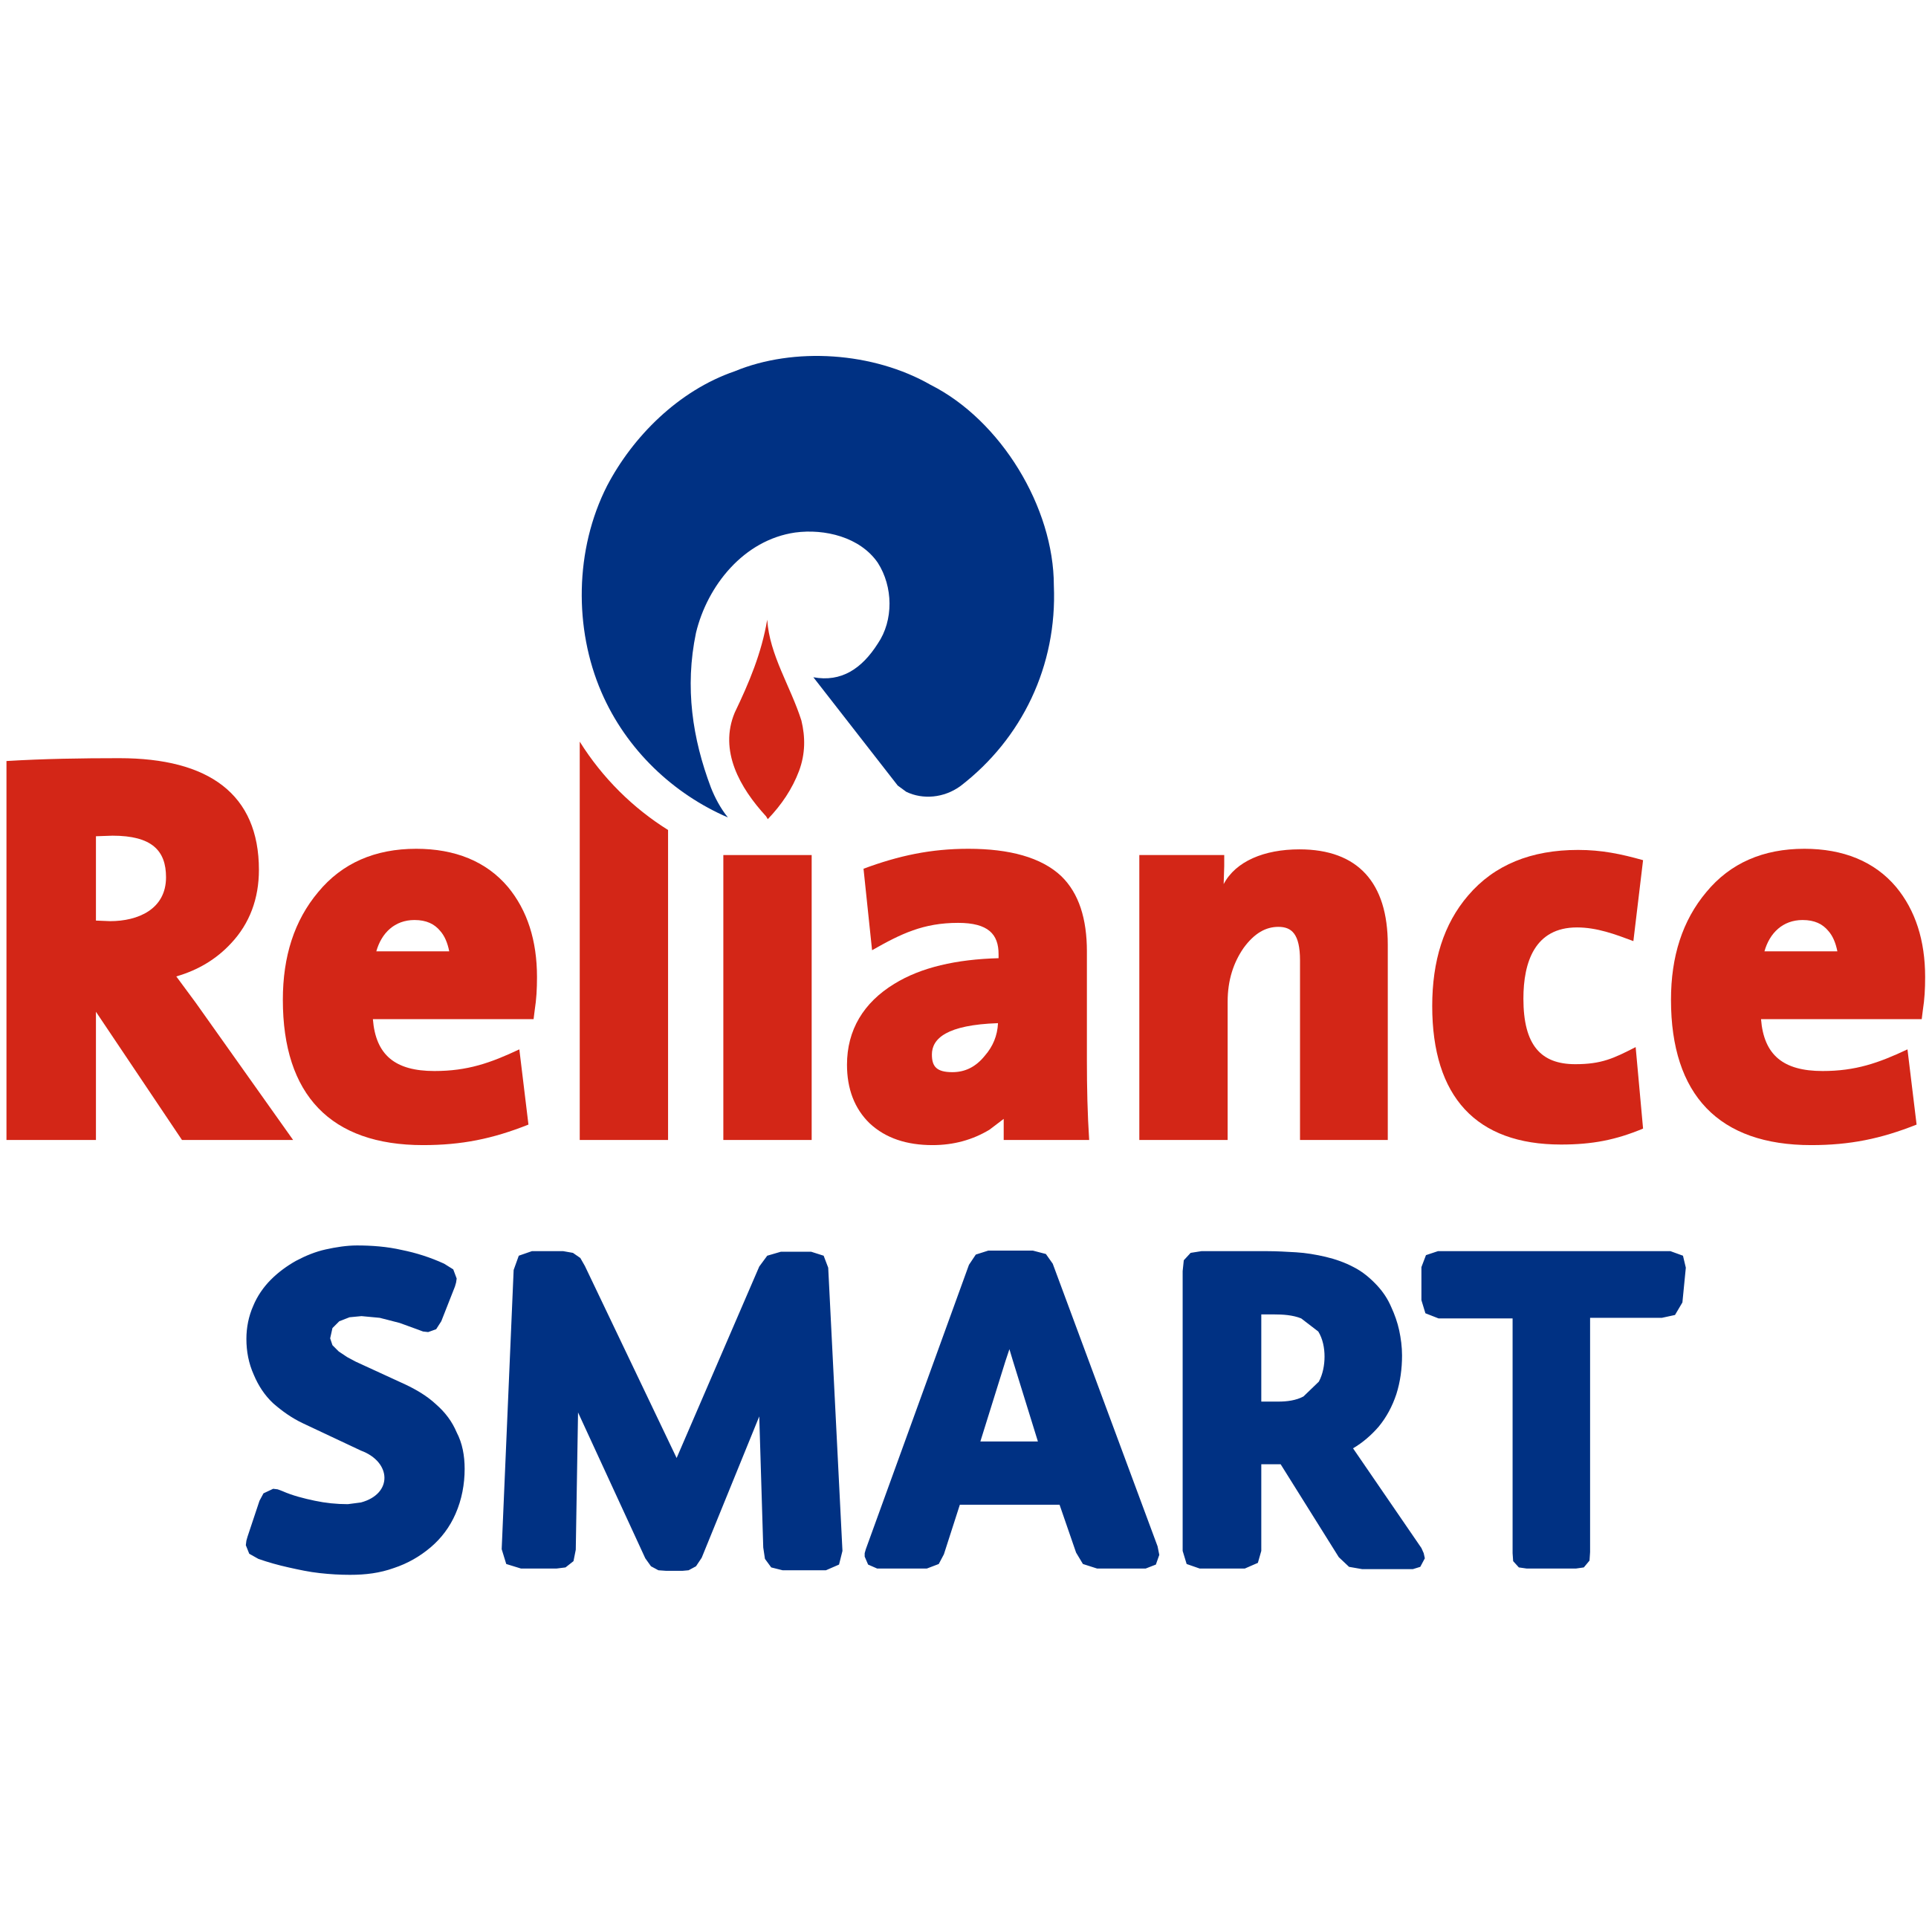 Reliance Smart Logo Transparent Picture